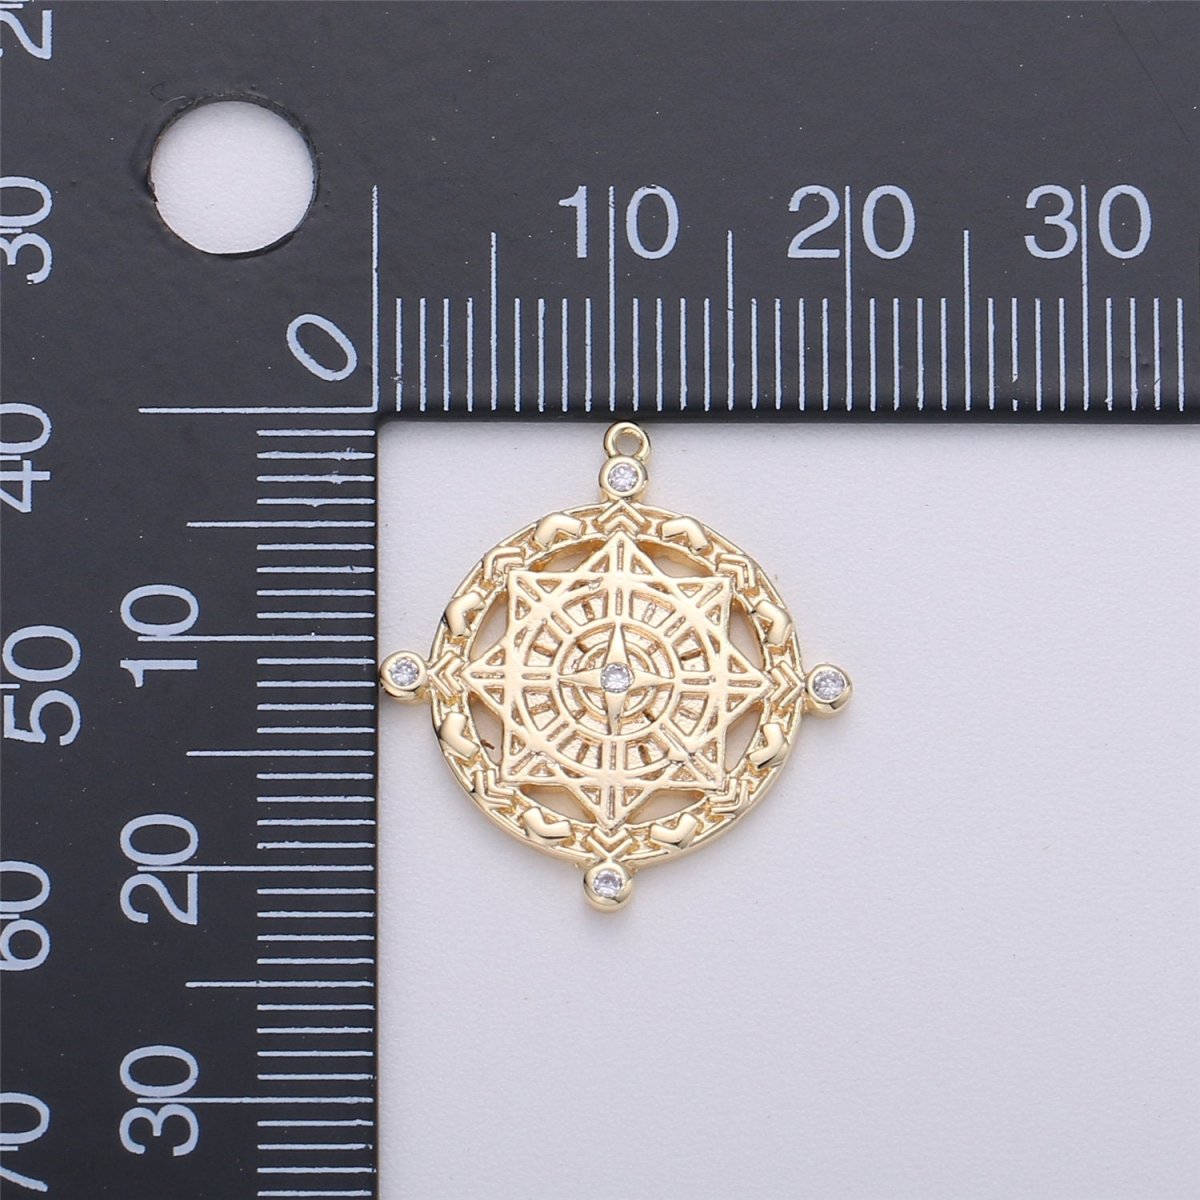 Compass Pendant, cubic zirconia stones, cz diamonds, 18K Gold Filled, medallion pendant for Necklace Jewelry MakingC-477 - DLUXCA